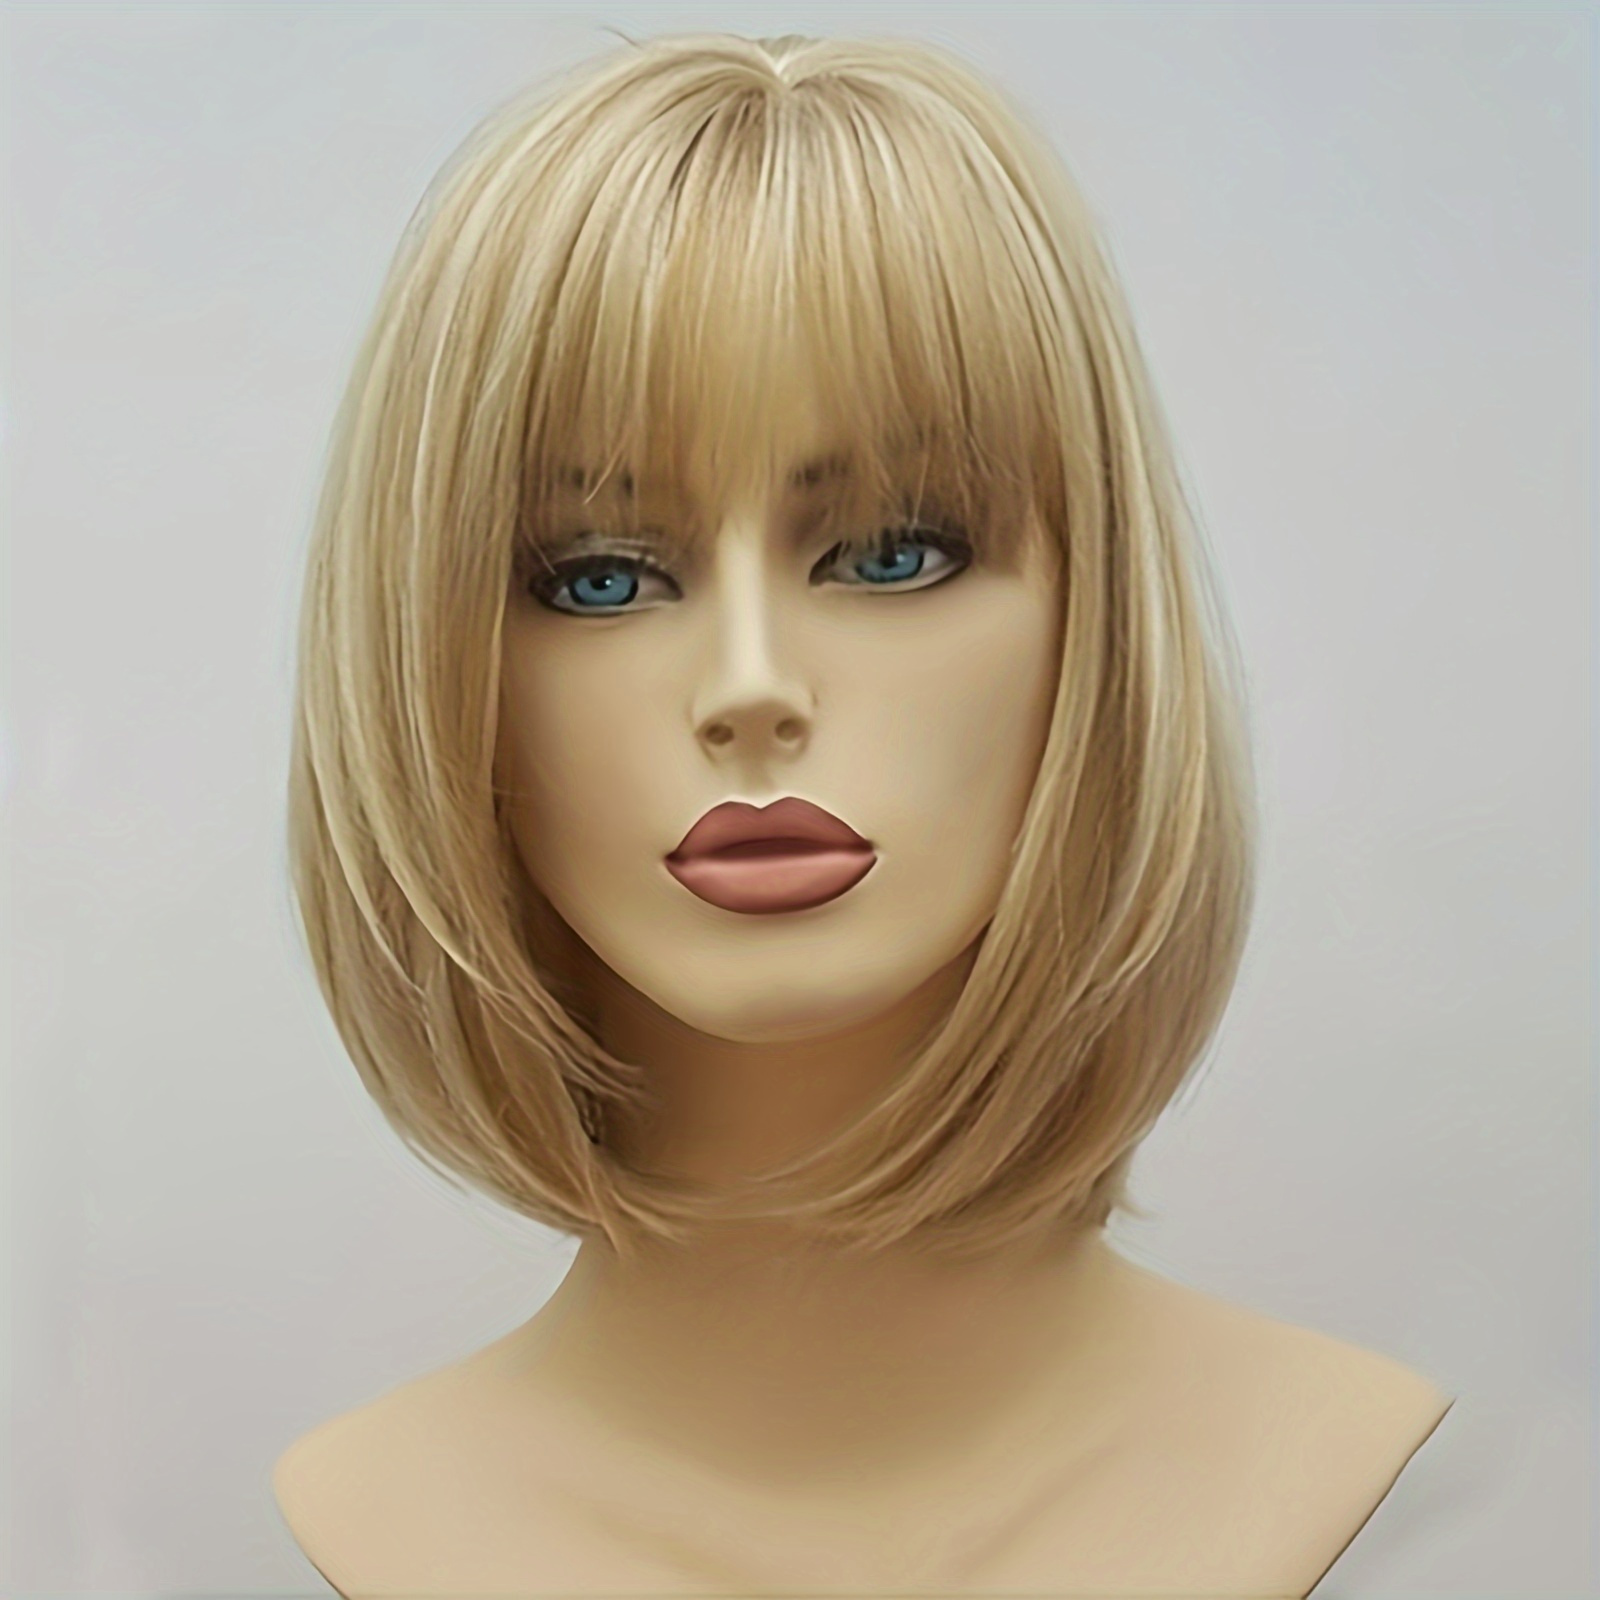 

Elegant 12-inch Blonde Highlight Short Straight Wig With Bangs For Women - 150% Density, Heat Resistant Synthetic Fiber, Beginner Friendly